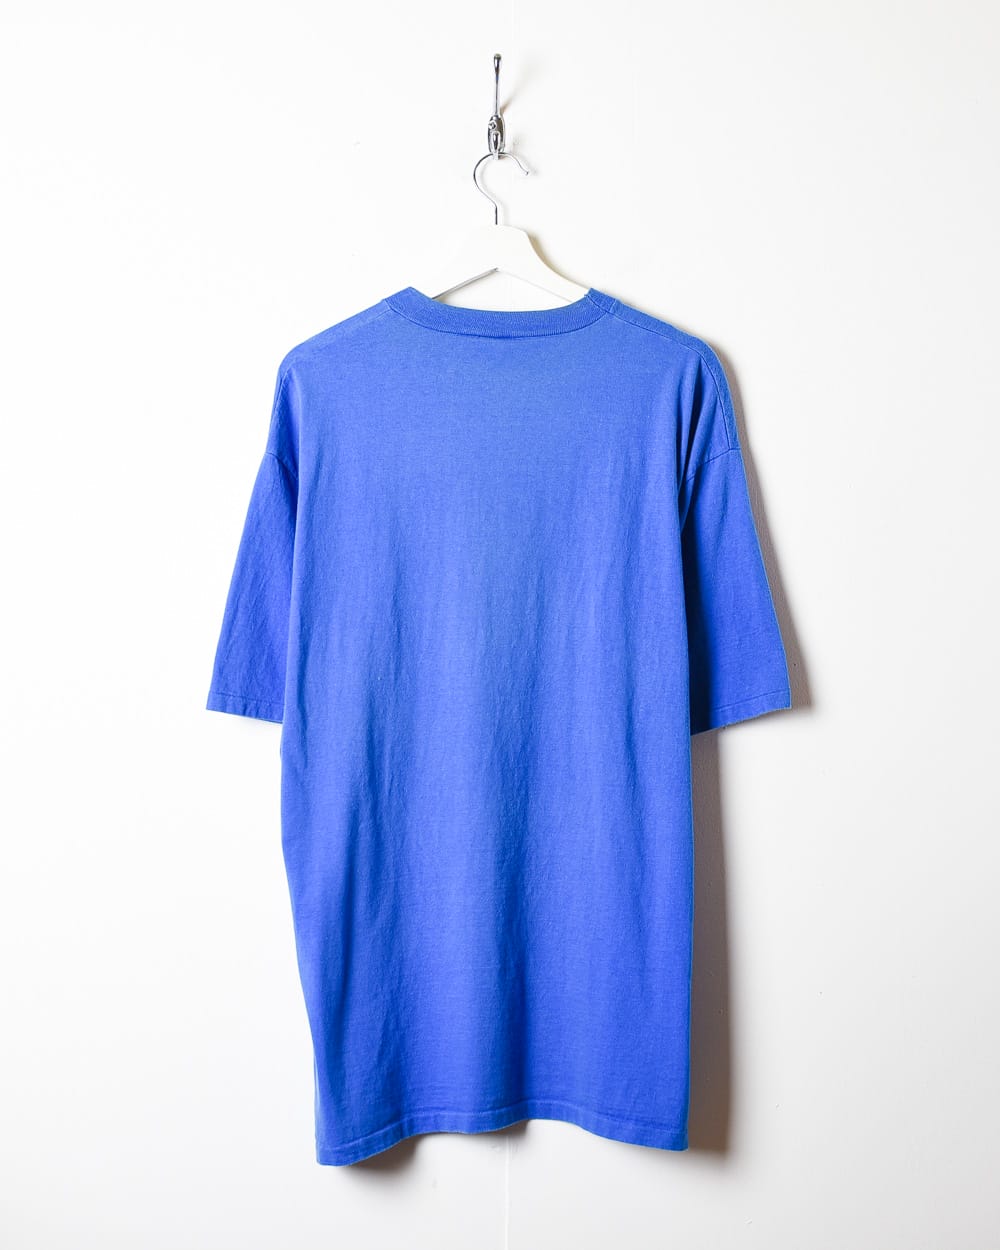 Blue University Of Victoria Vikes Single Stitch T-Shirt - X-Large